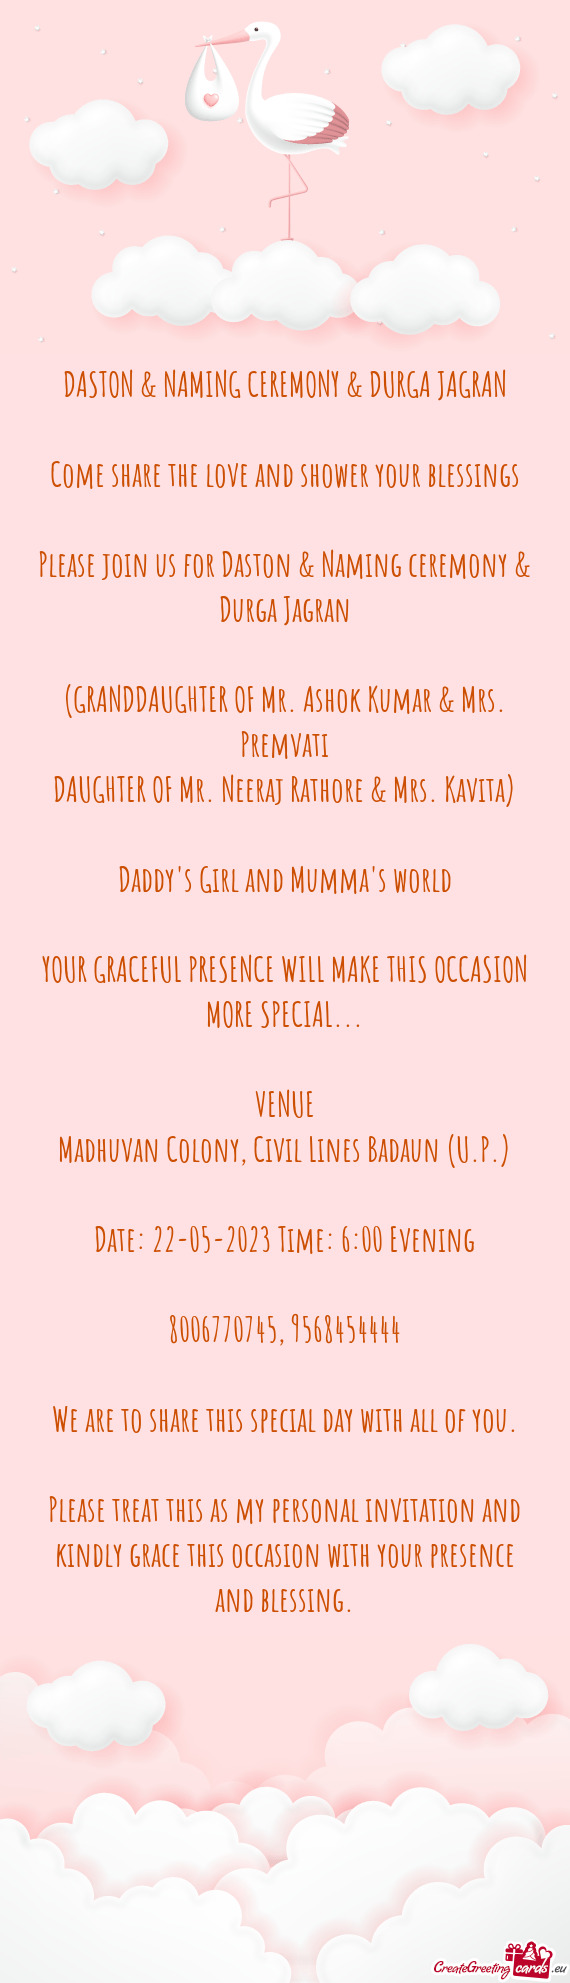 Please join us for Daston & Naming ceremony & Durga Jagran